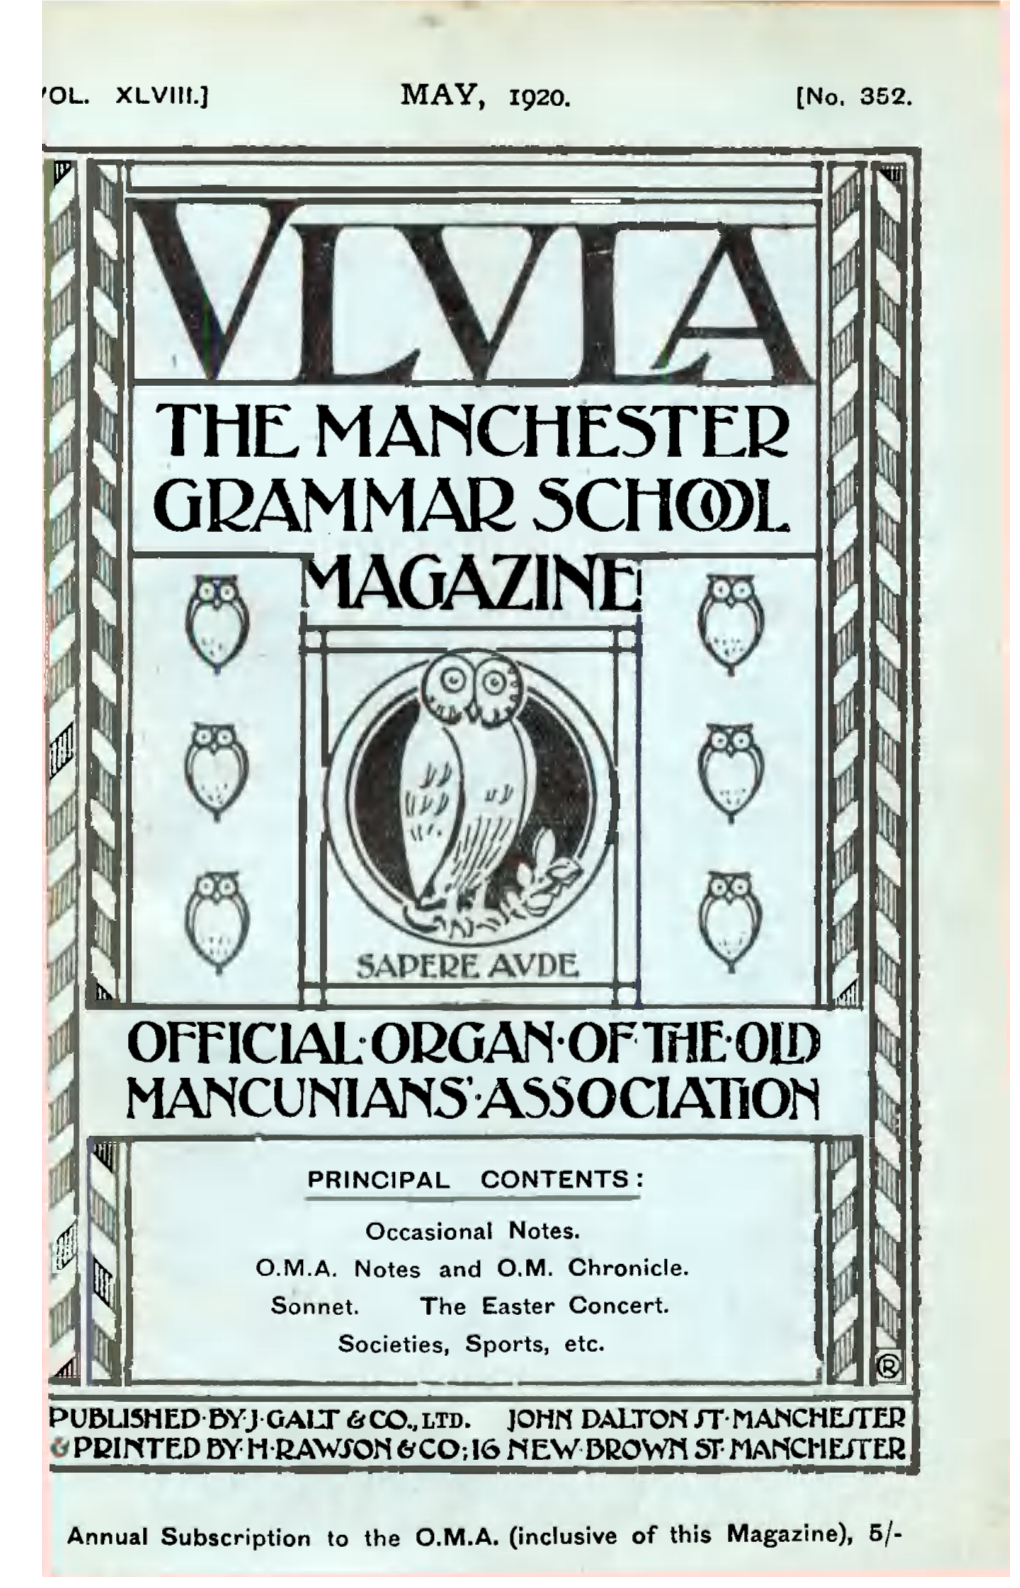 The Manchester Grammar 5Chgdl Magazine)